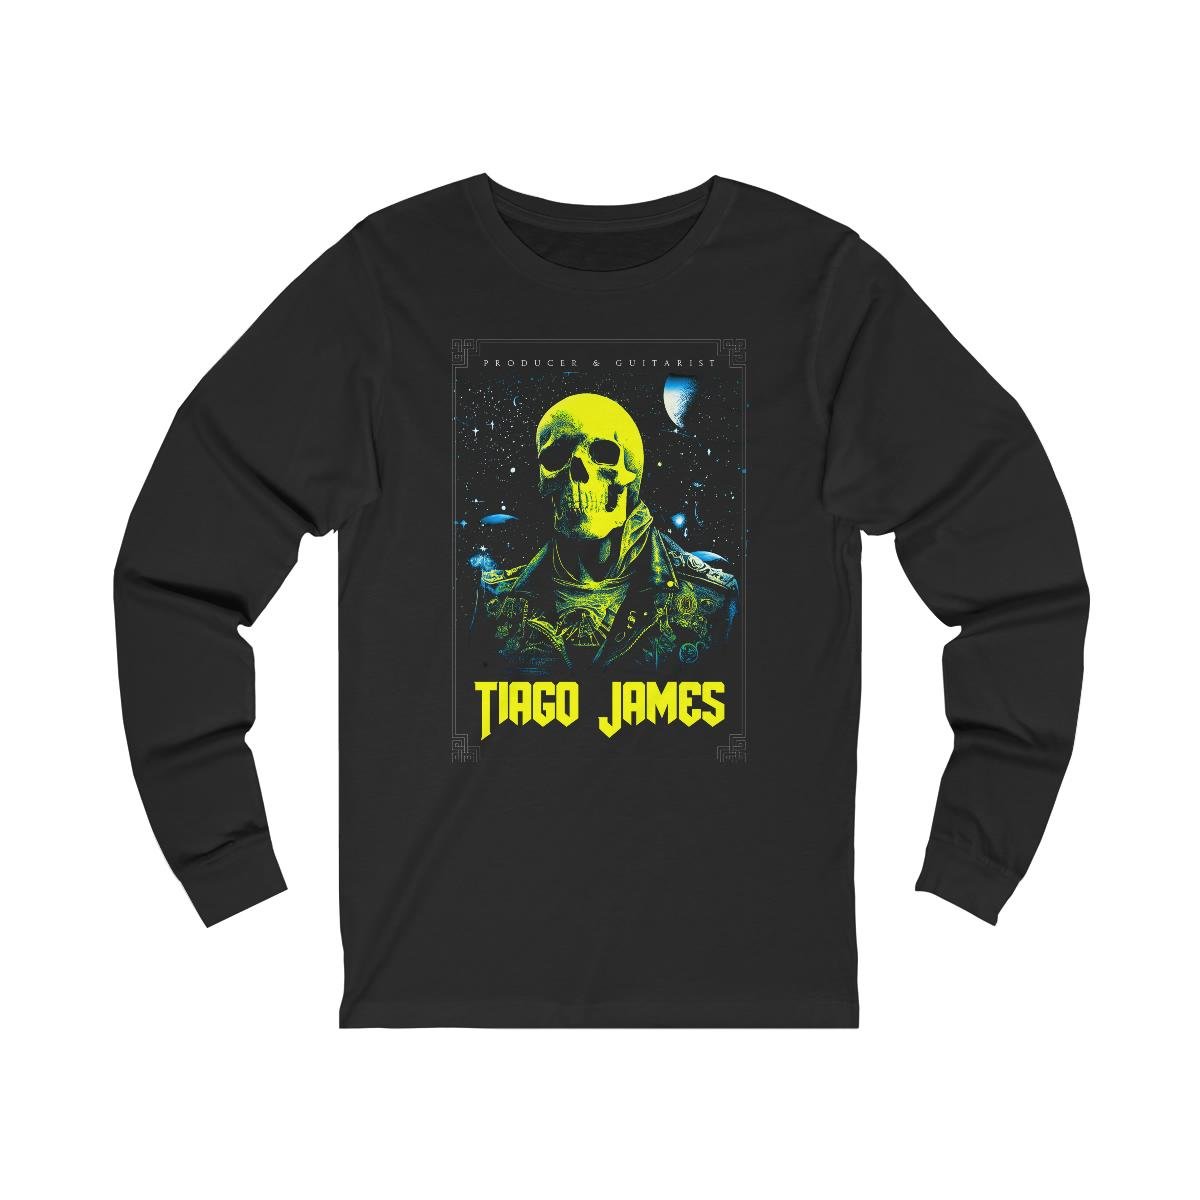 Tiago James – Guitarist And Producer Long Sleeve Tshirt